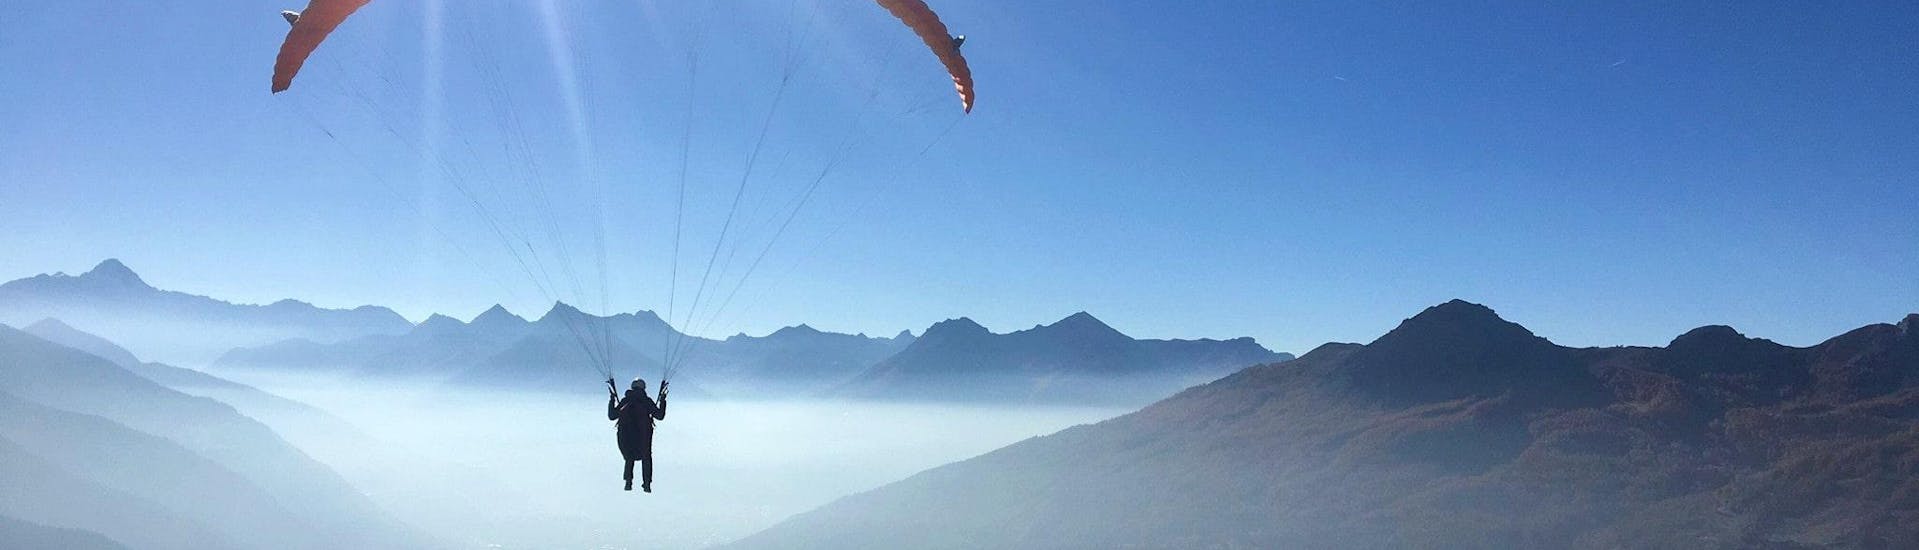 tandem-paragliding-col-du-galibier-thermal-flight-emotion-air-hero